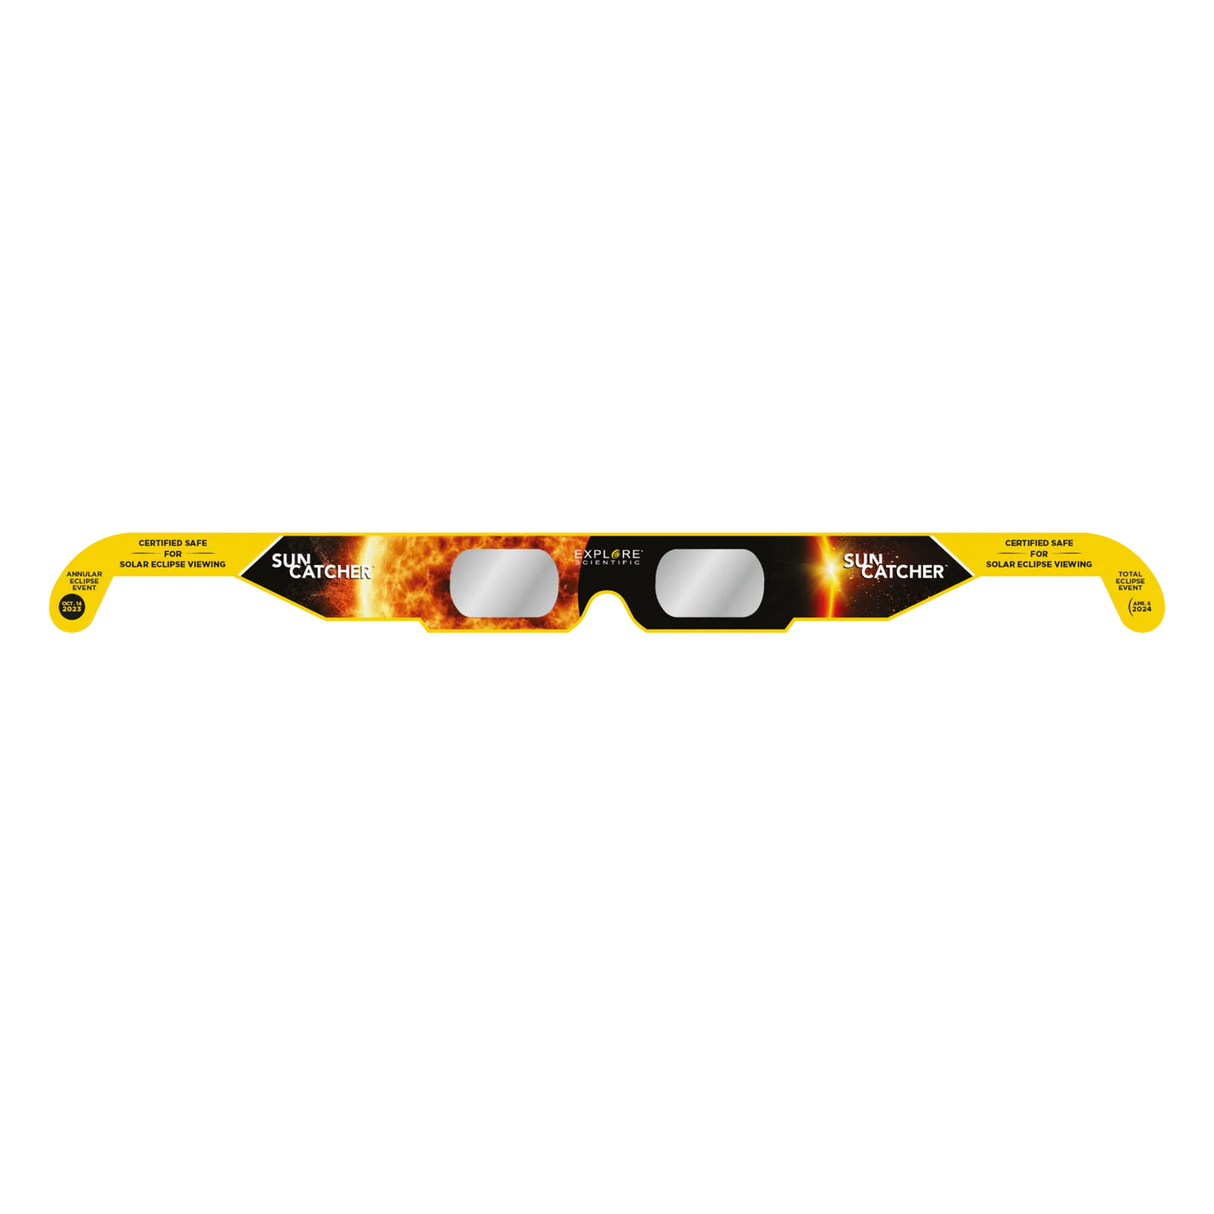 Sun Catcher Solar Eclipse Glasses